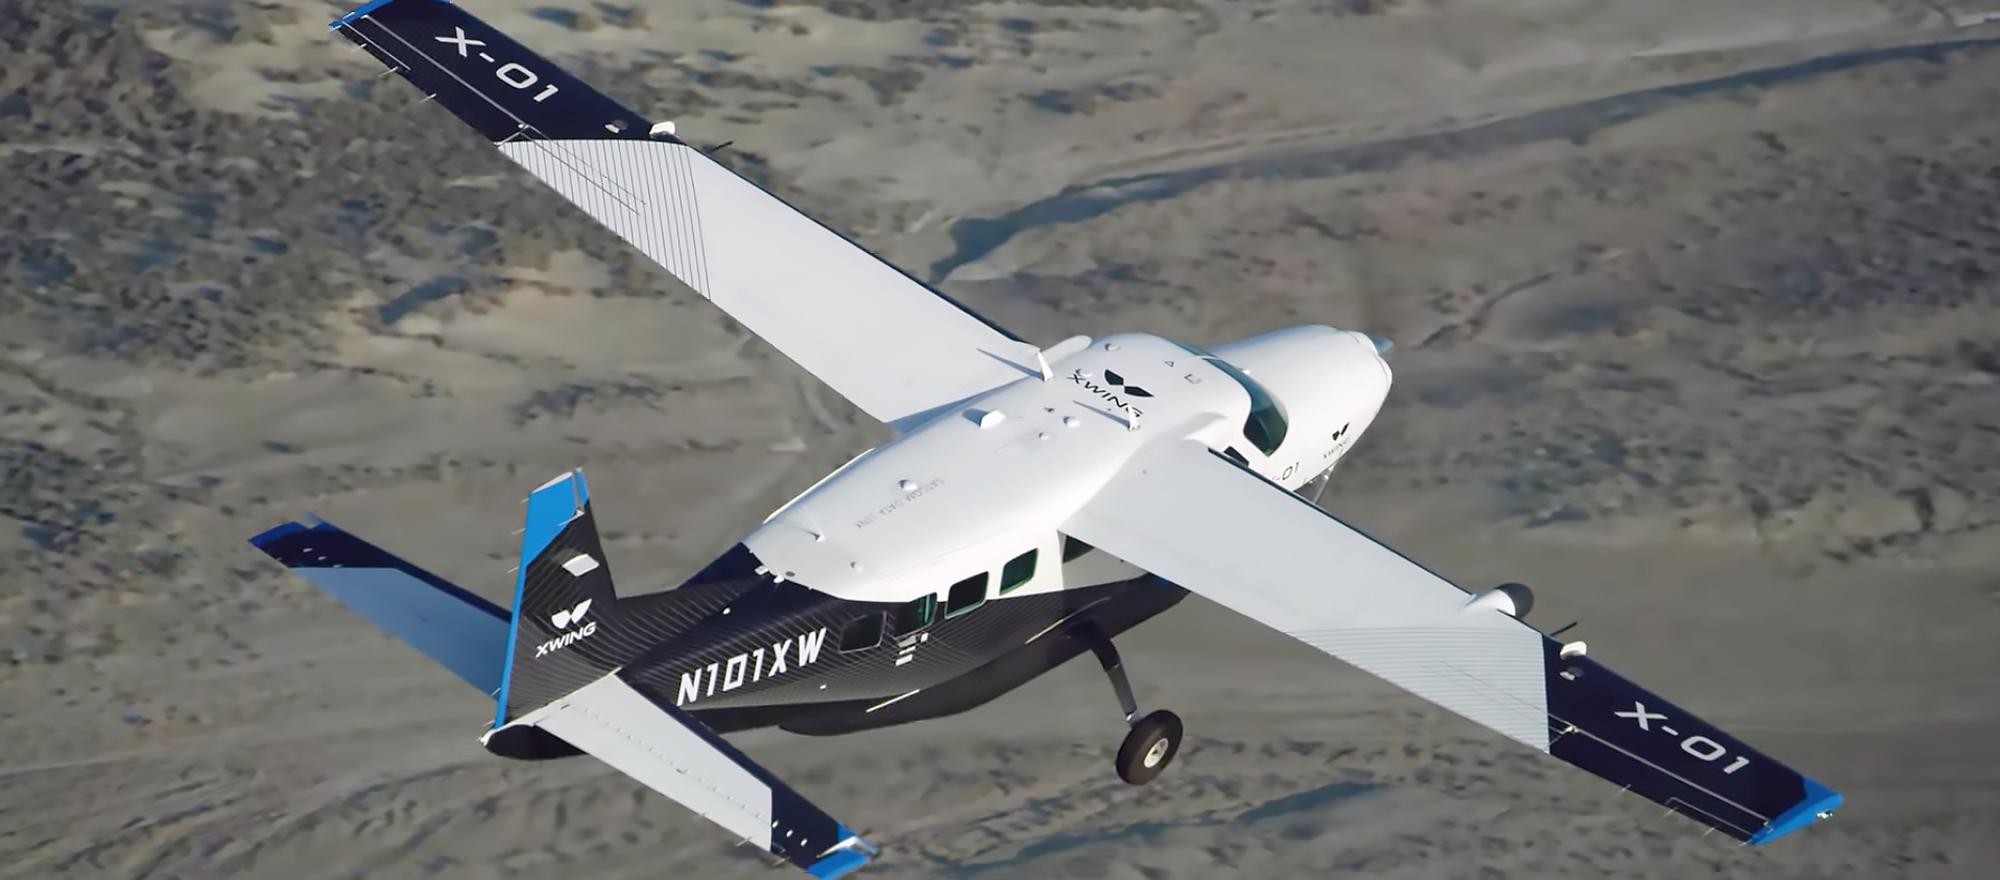 Xwing's autonomous modified Cessna 208B Grand Caravan.